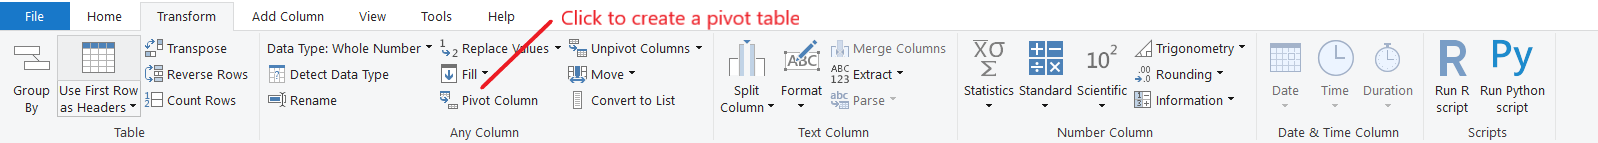 Create Pivot Table